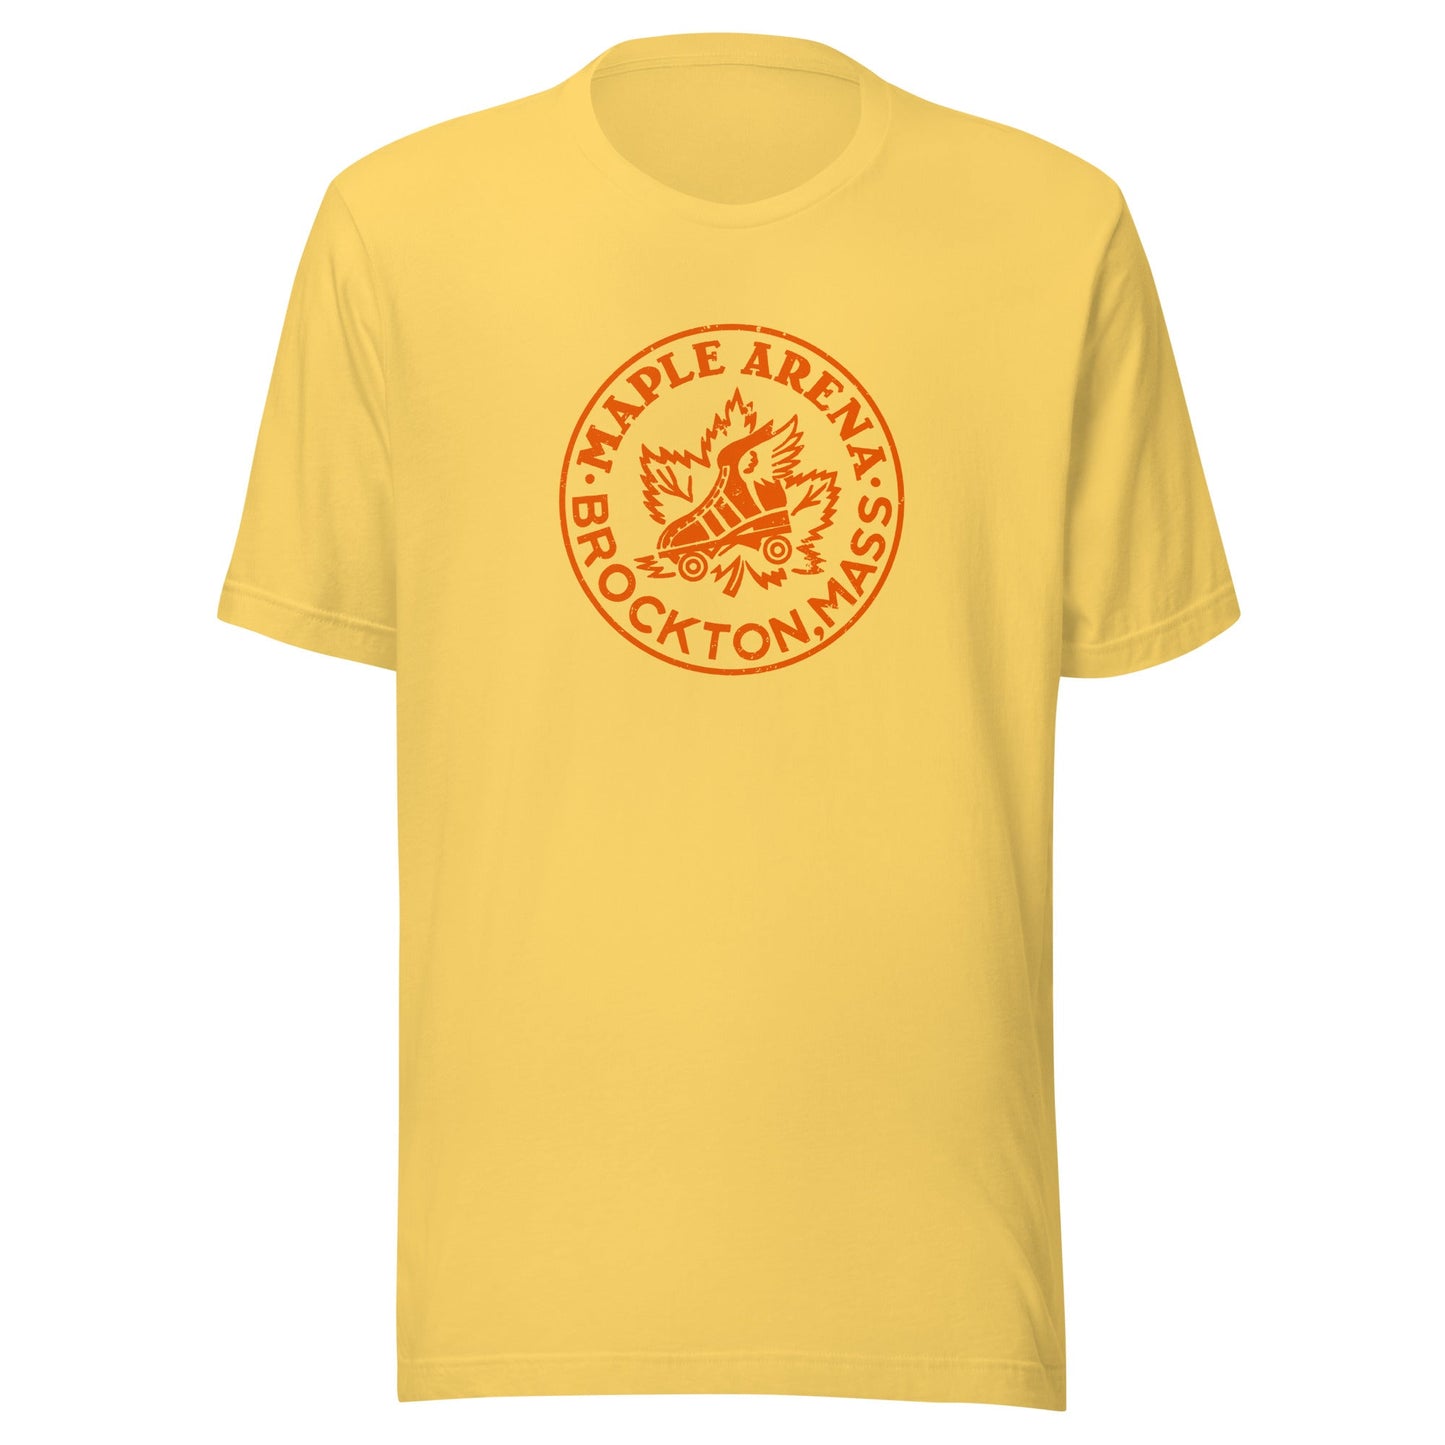 Maple Arena T-Shirt - Brockton, MA | Retro Roller Skating Rink Vintage Graphic Tee